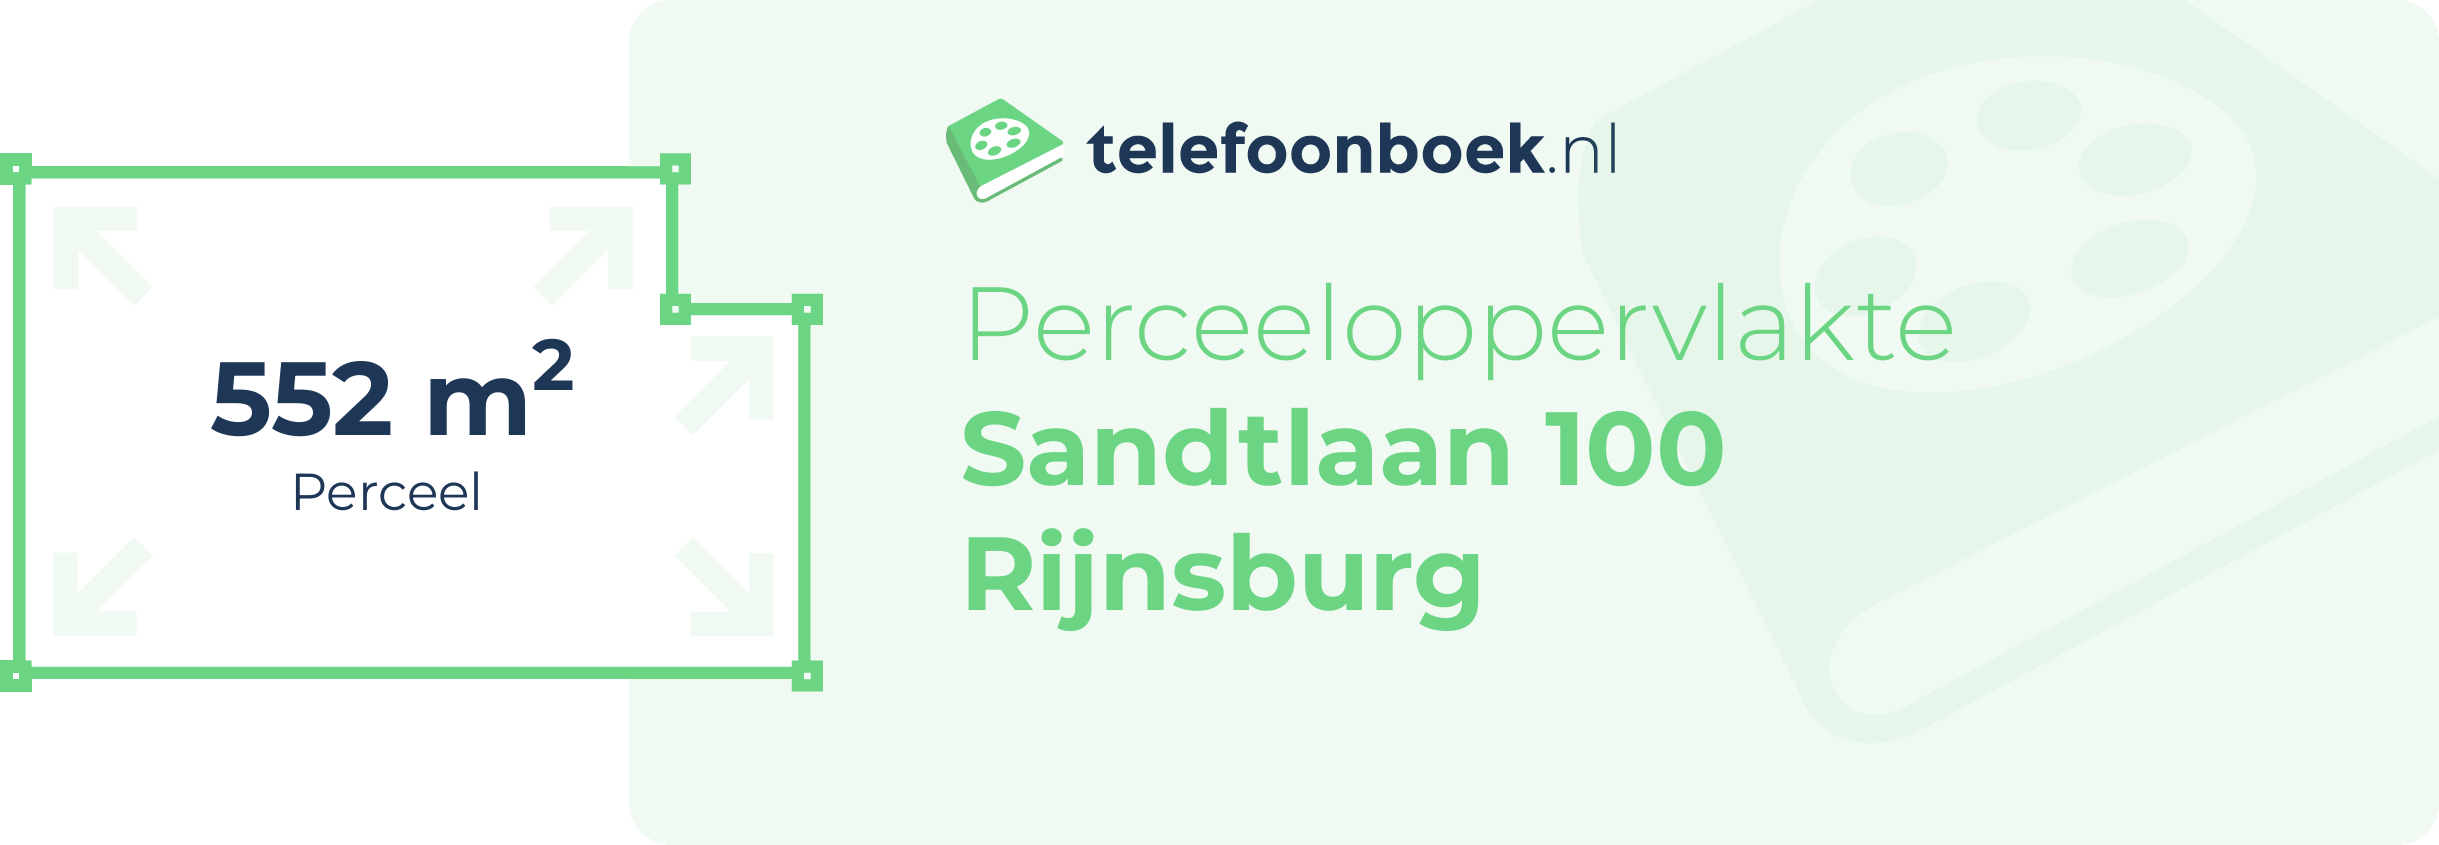 Perceeloppervlakte Sandtlaan 100 Rijnsburg